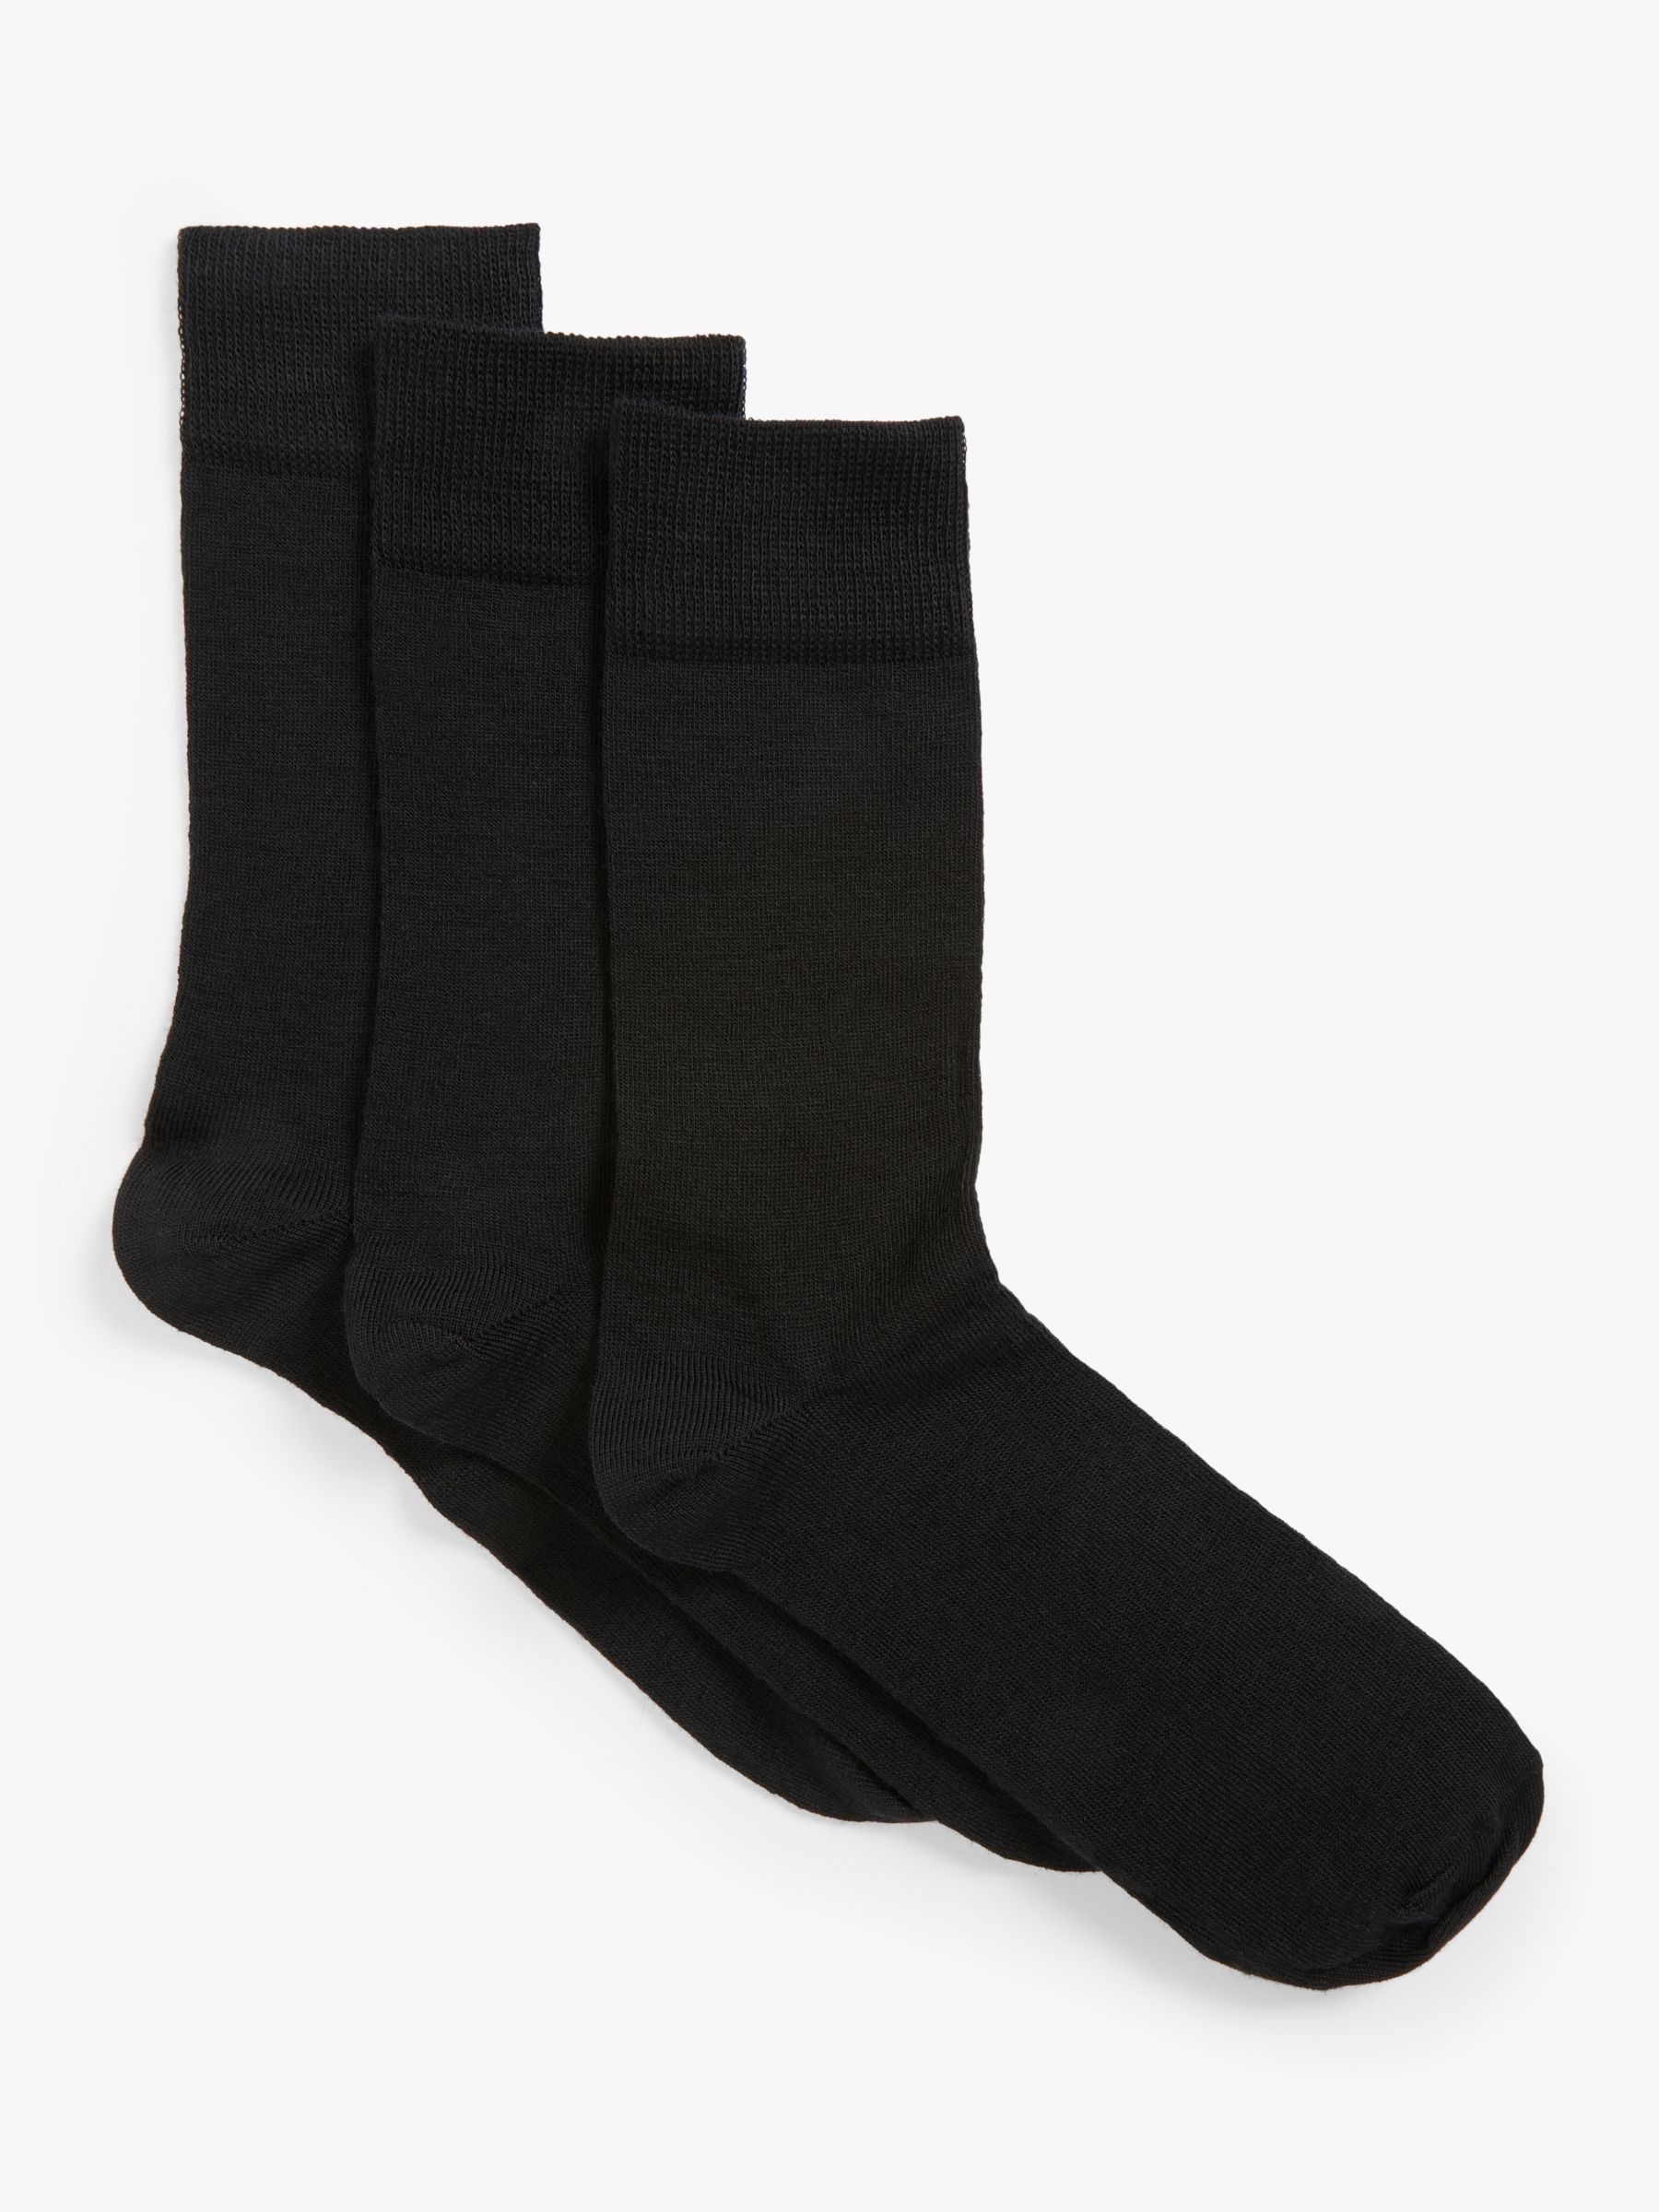 John Lewis Wool Mix Men's Socks, Pack of 3, Black, S